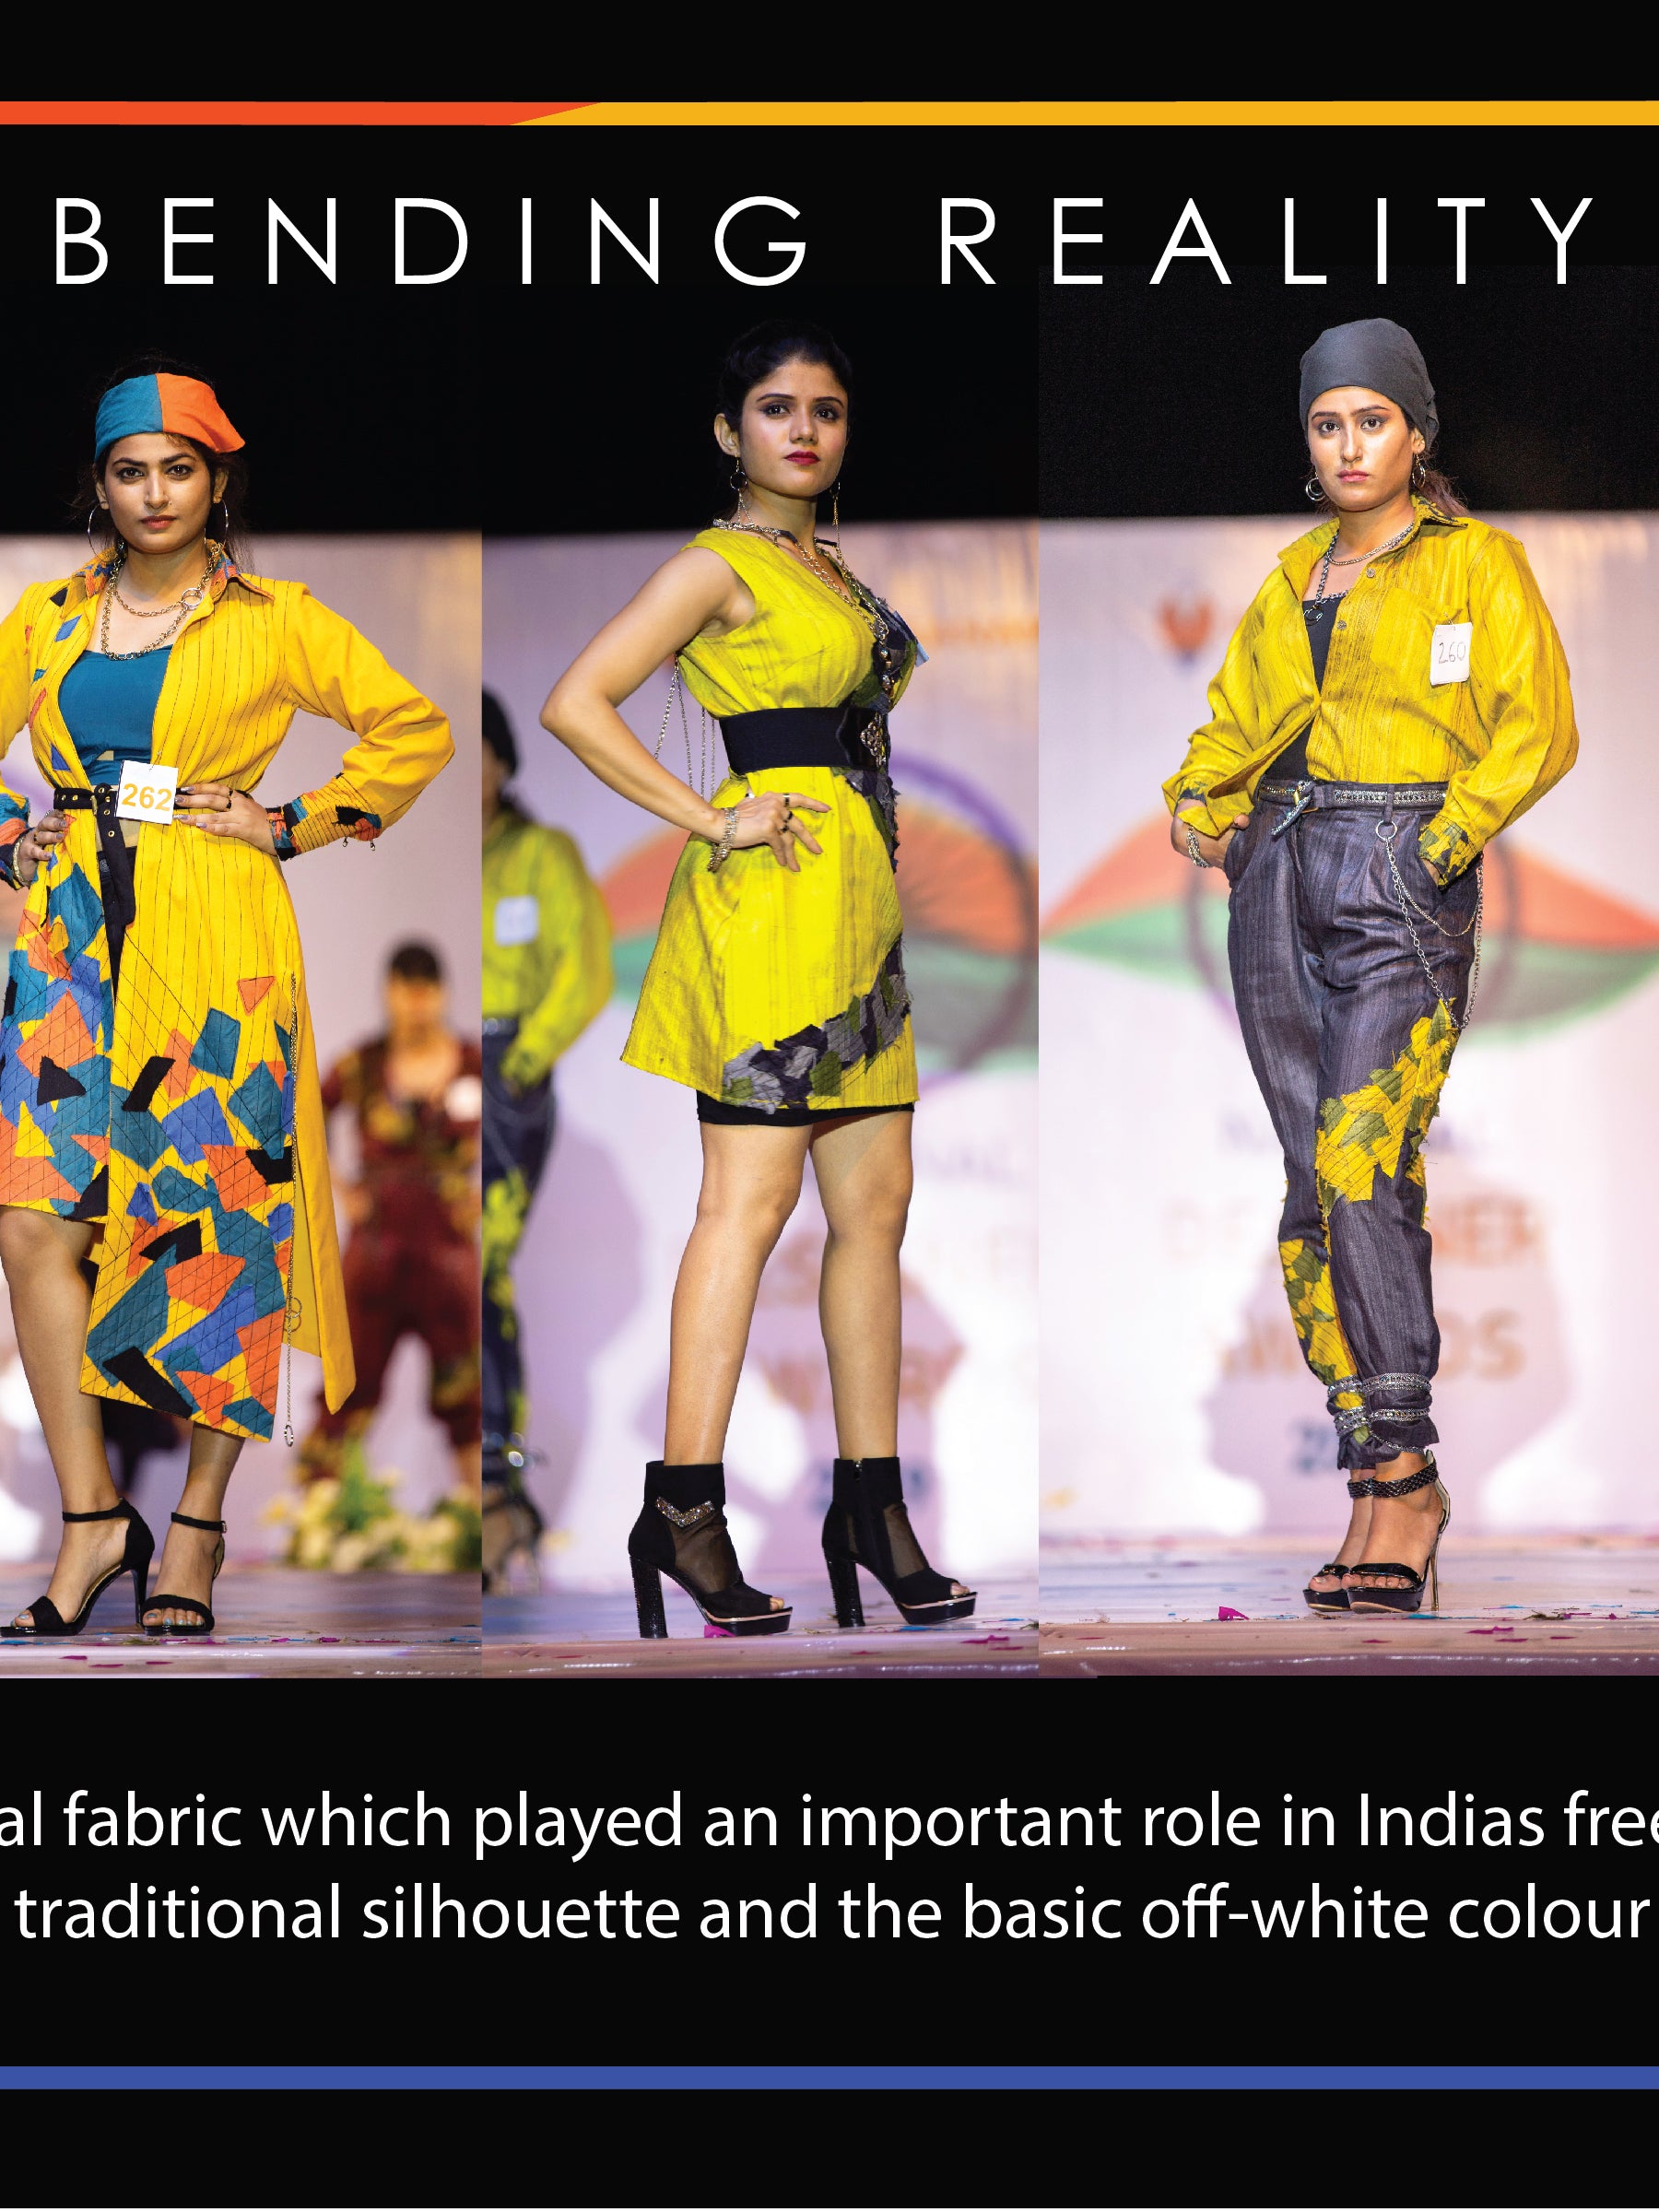 "Khadi Fashion Show - Upcycle Fashion in Goa by BunkoJunko: BunkoJunko's eco-friendly upcycled fashion collection featured in a Khadi fashion show in Goa."